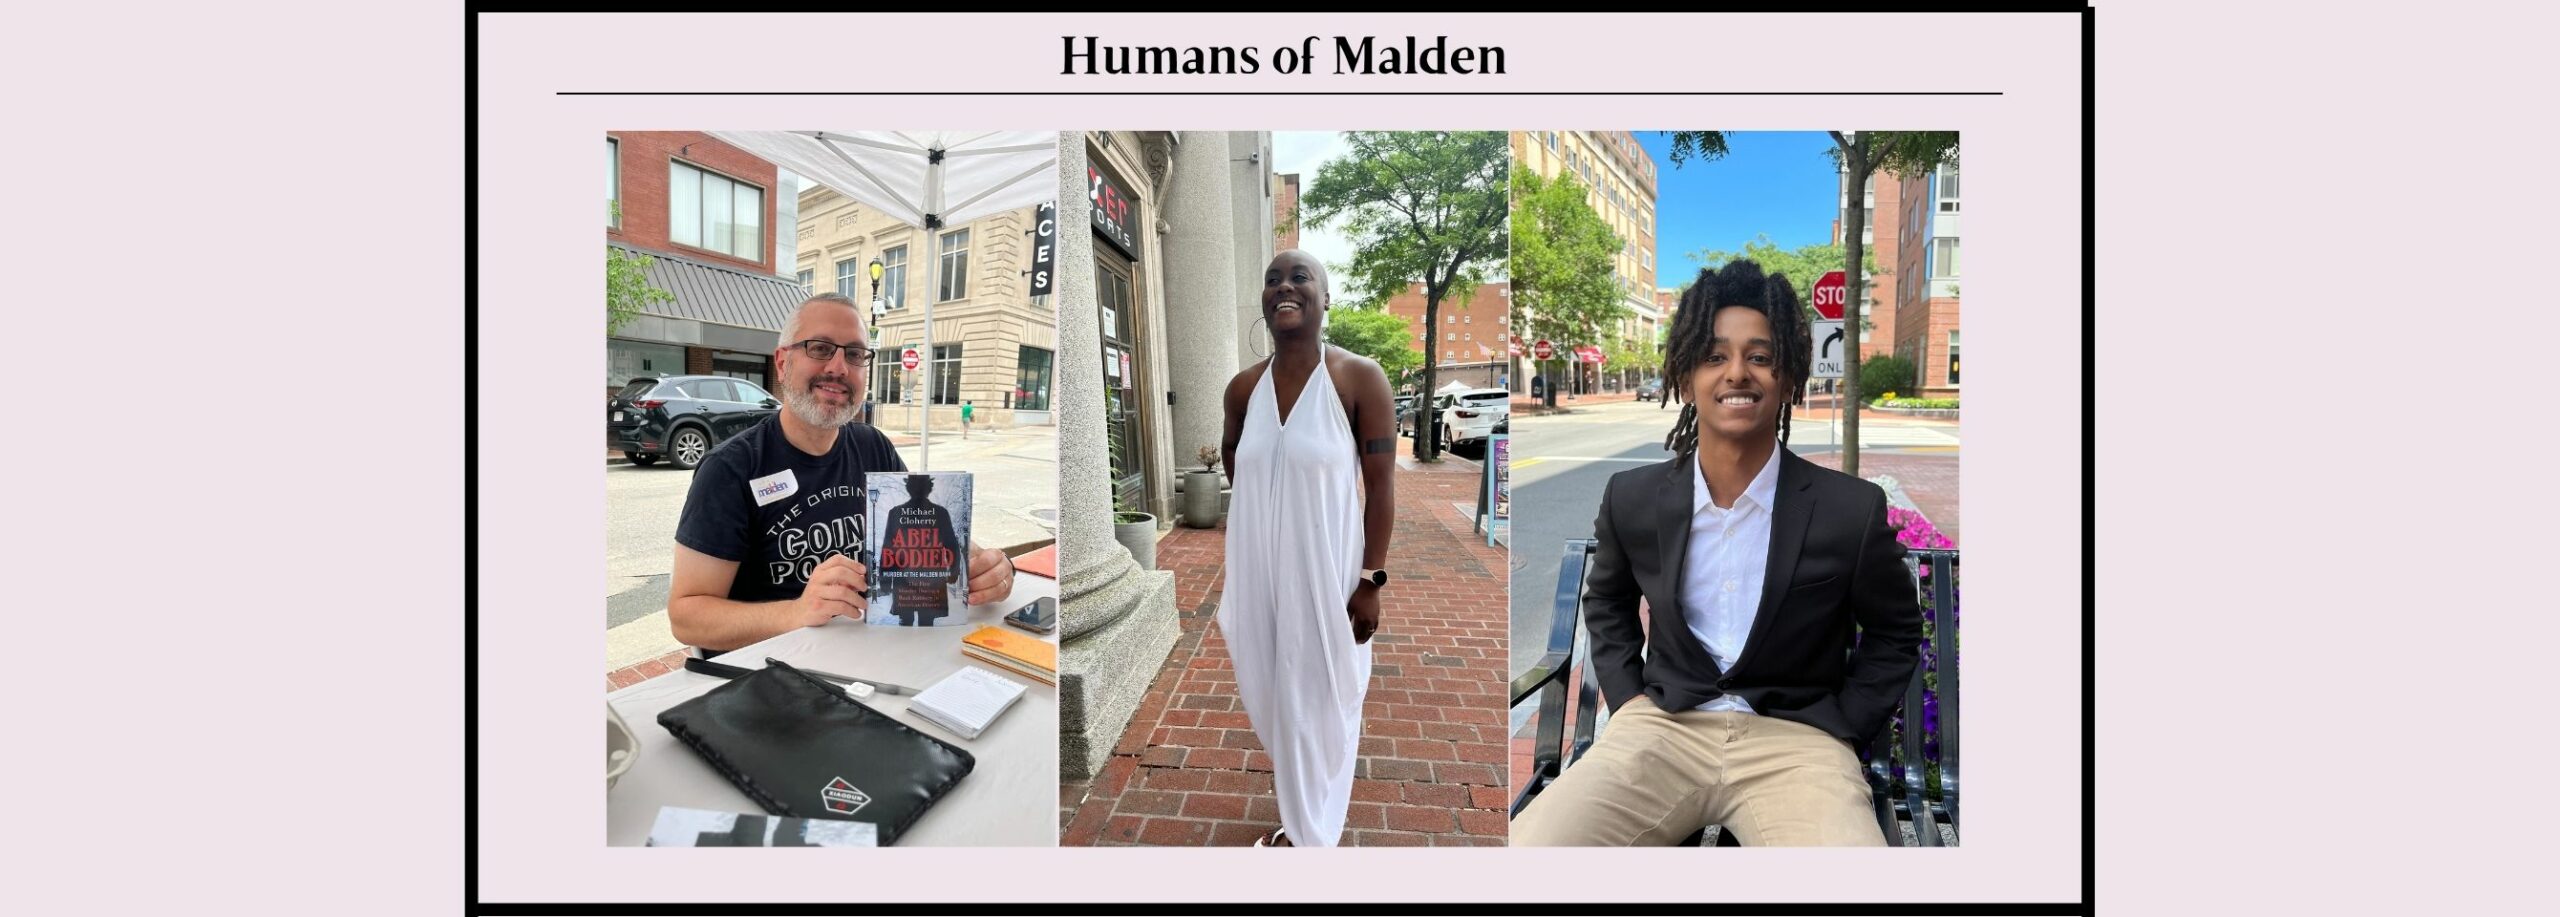 Humans of Malden three portraits